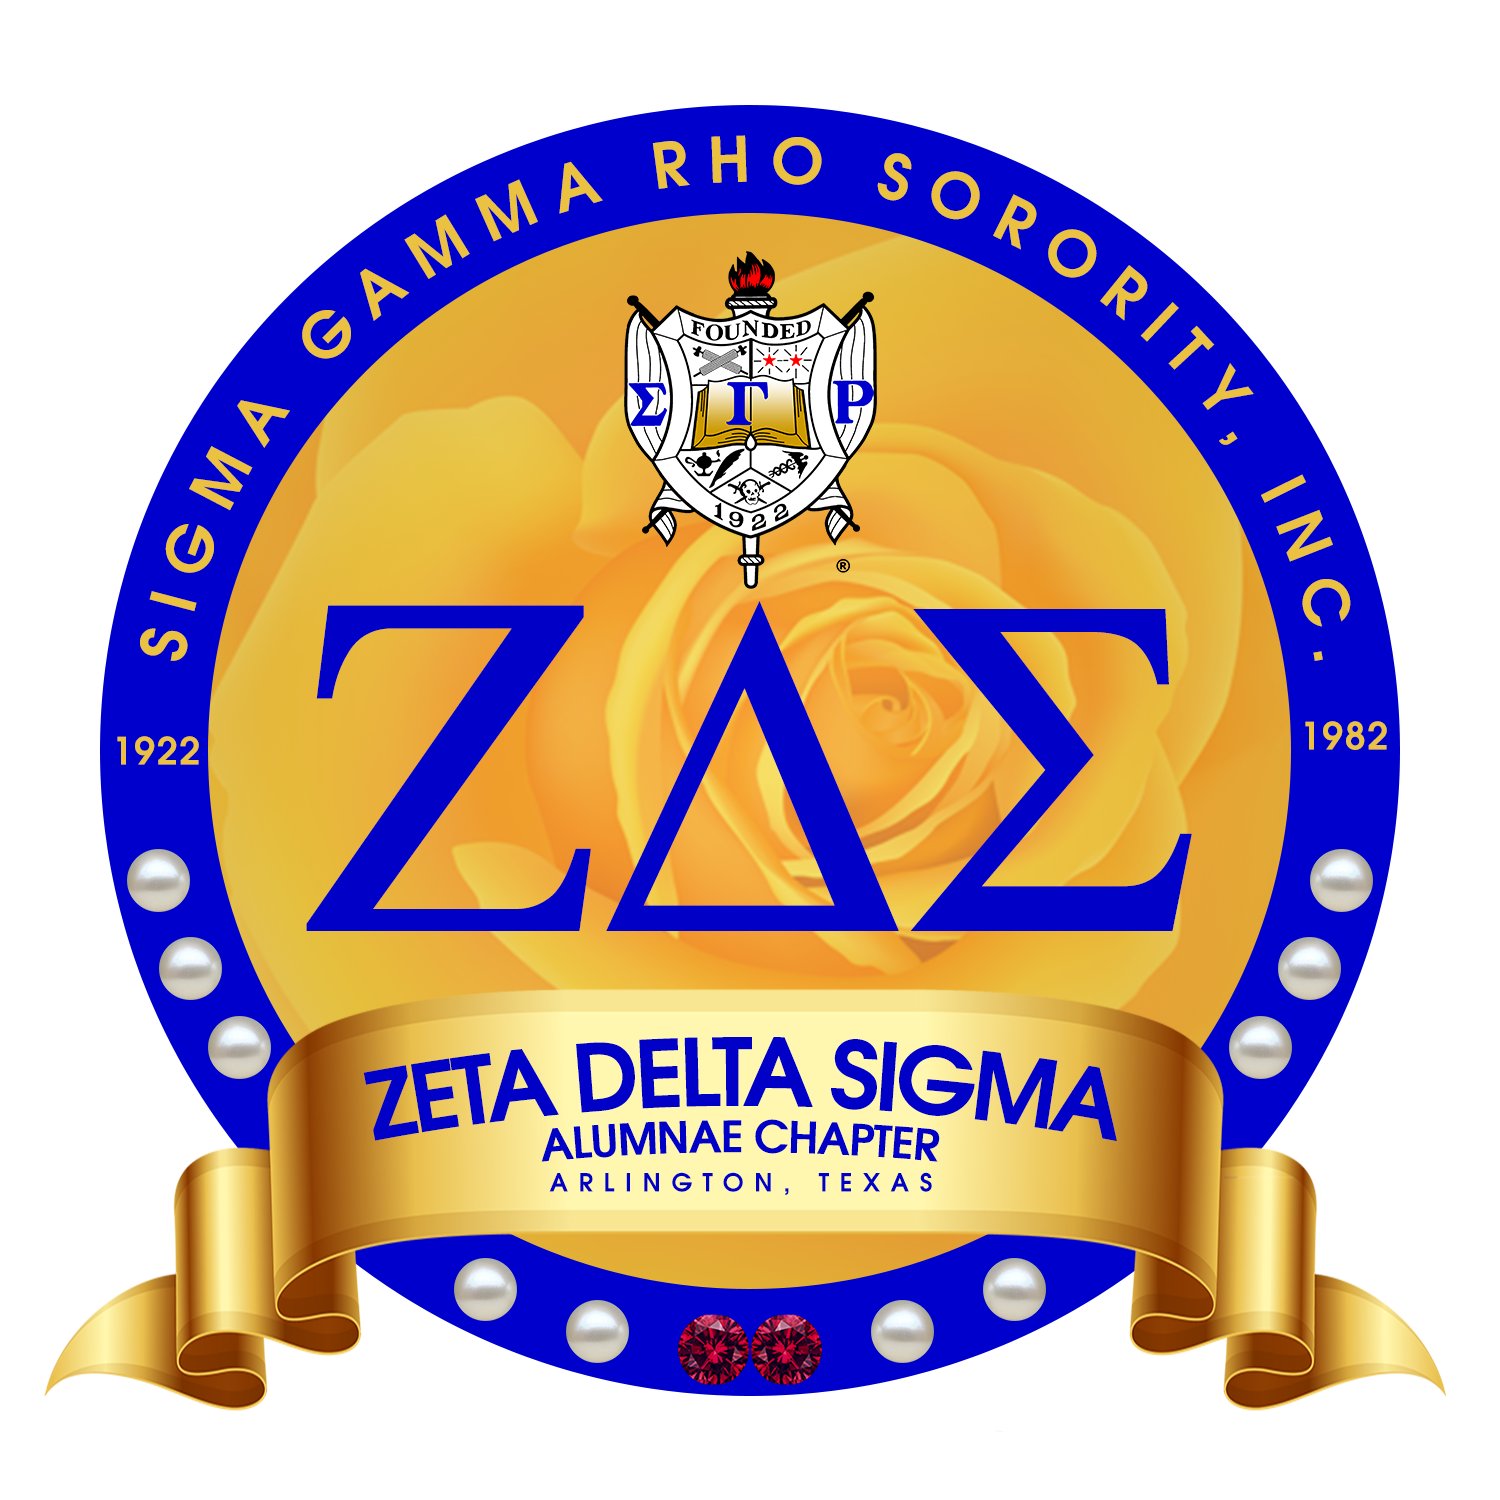 The Zeta Delta Sigma Alumnae Chapter of Sigma Gamma Rho Sorority Inc. was chartered on June 26, 1982 in Arlington, Texas